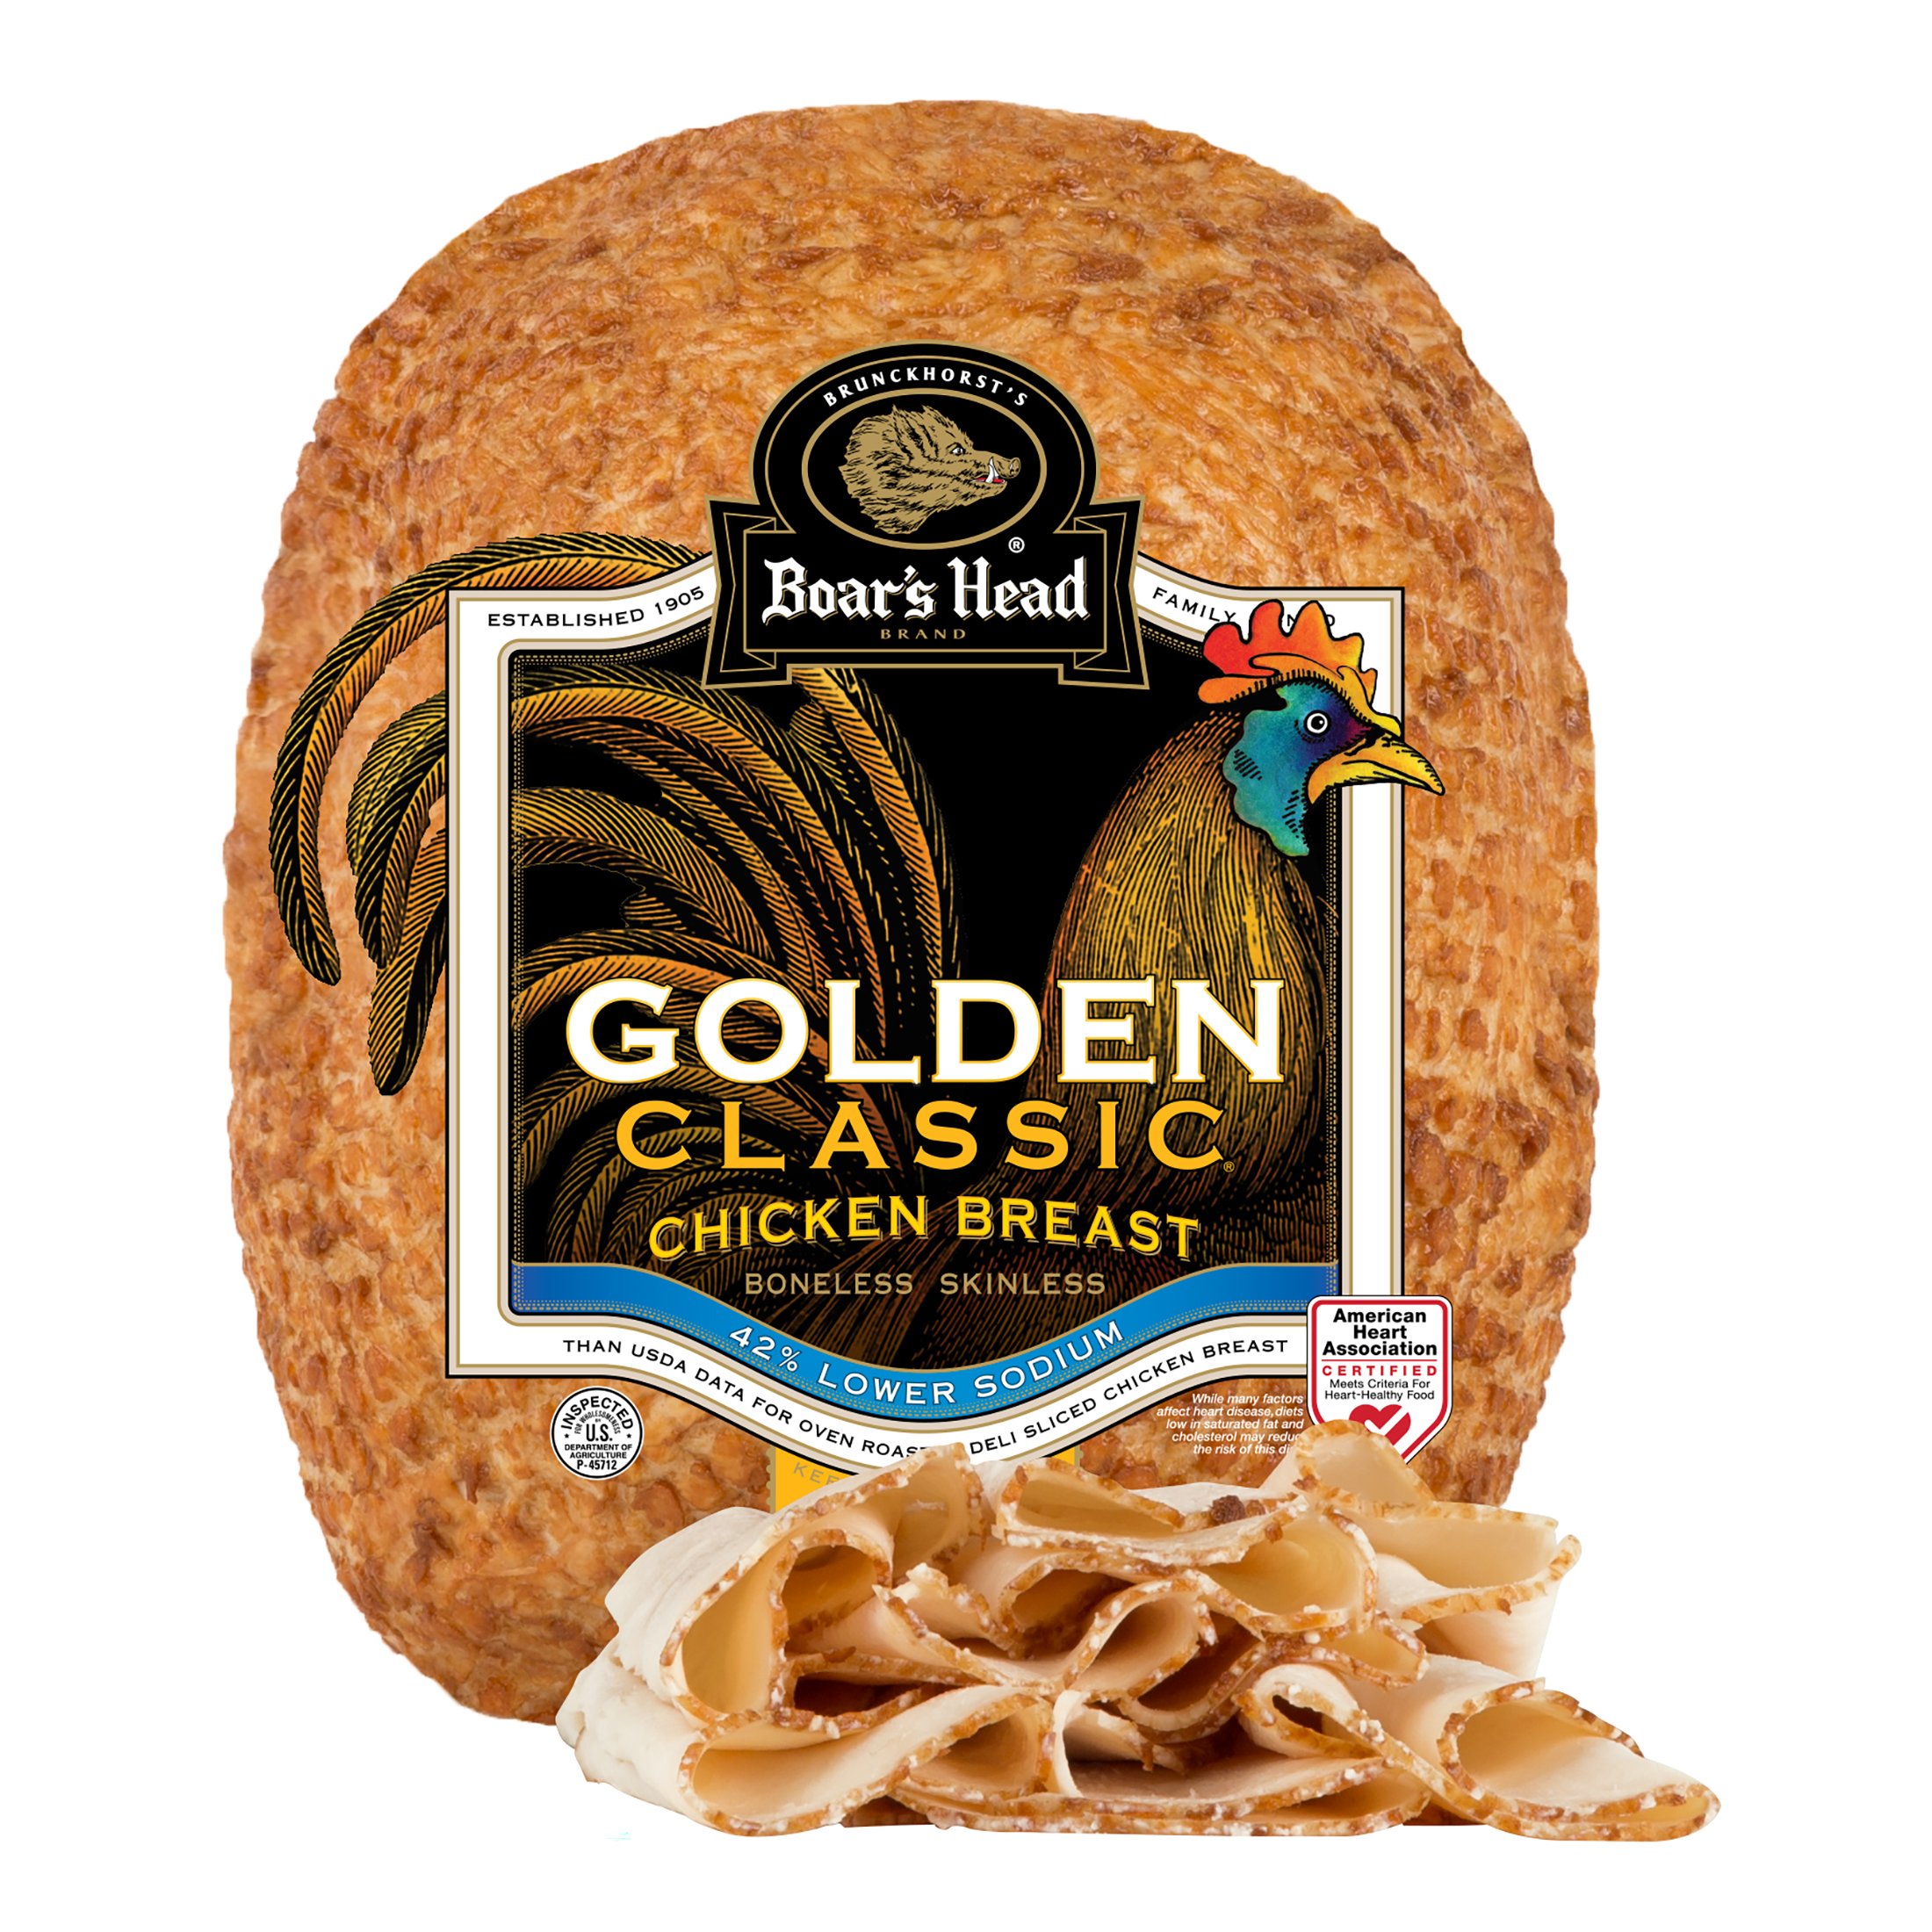 Boar's Head Golden Classic Oven Roasted Chicken Breast